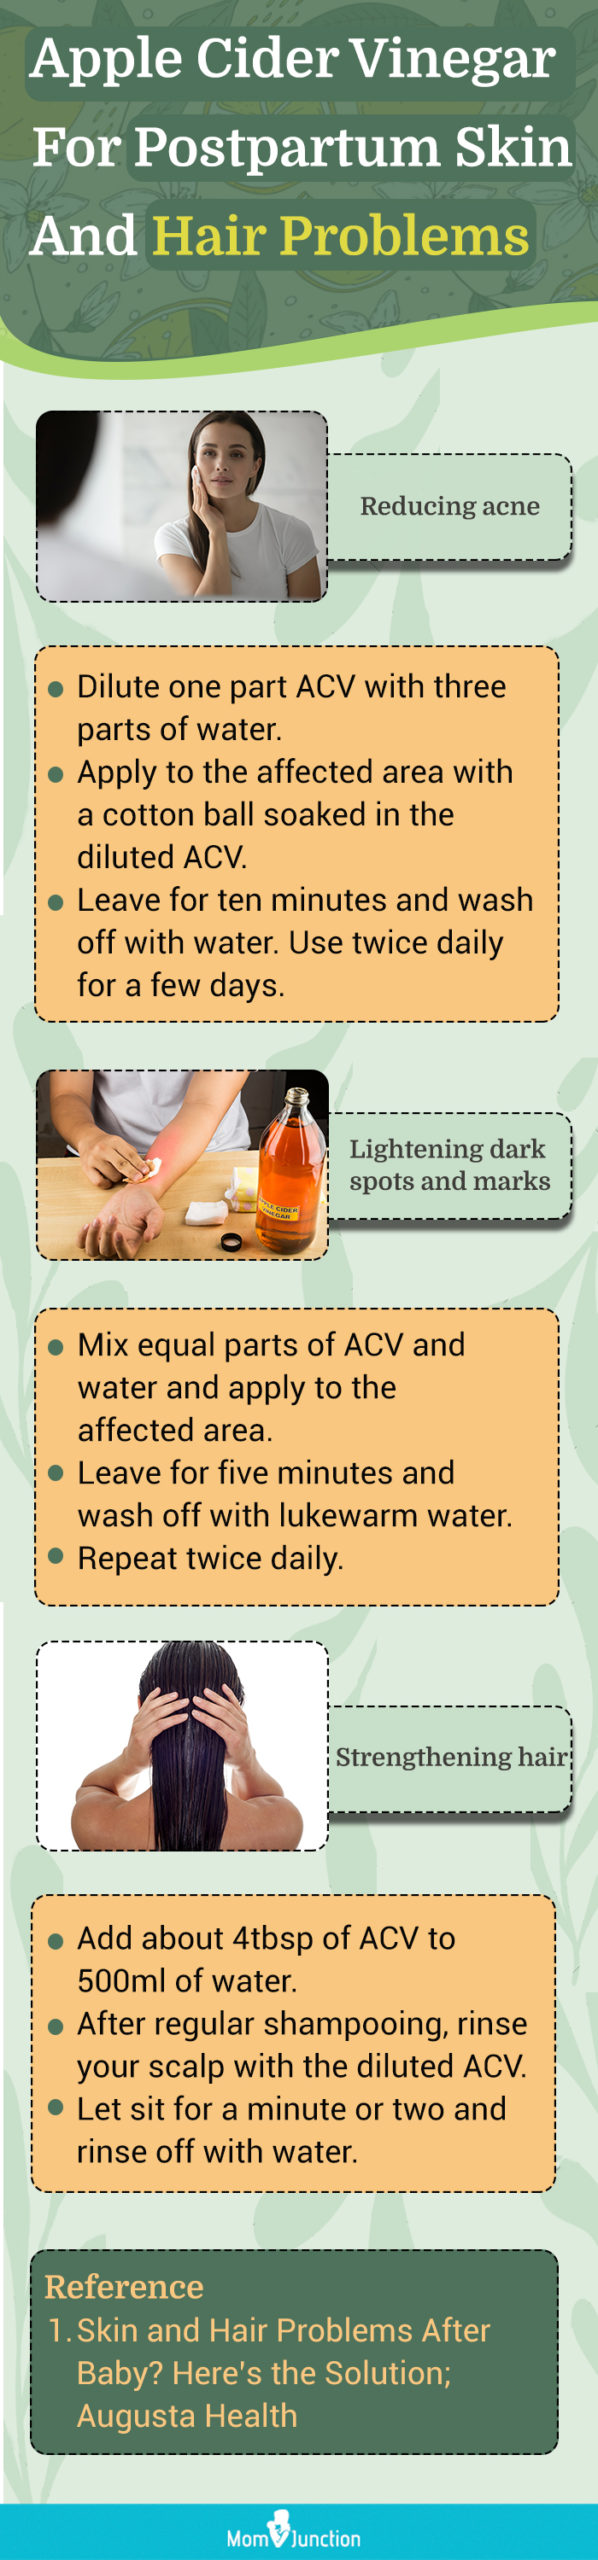 apple cider vinegar for postpartum skin and hair problems [infographic]